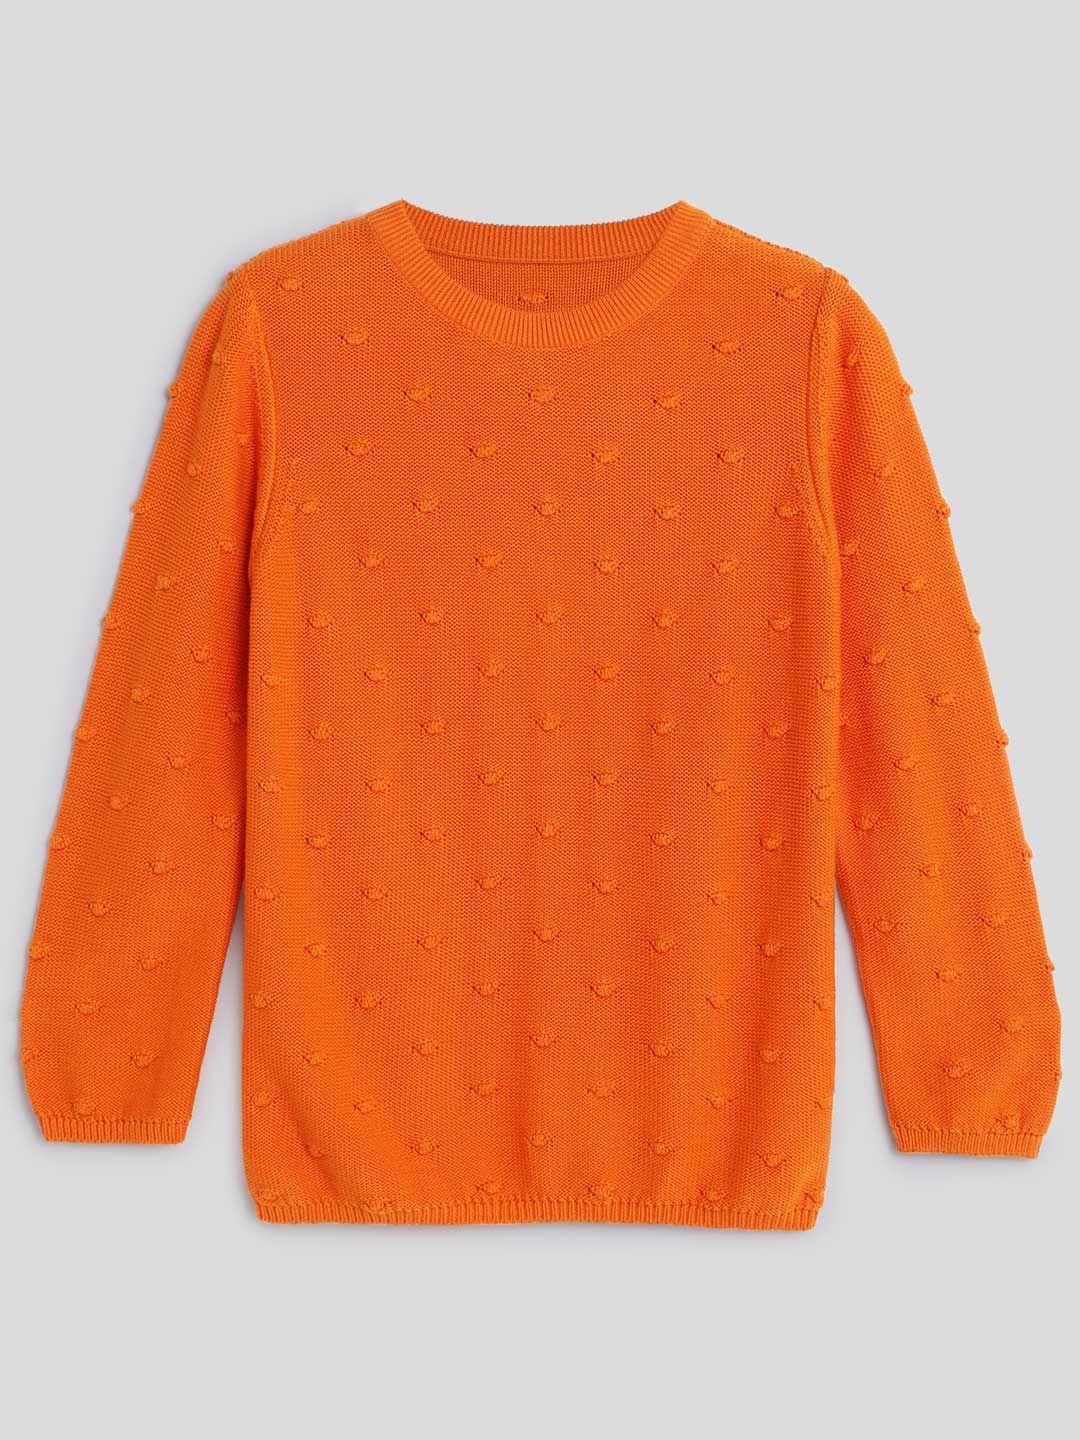 somersault-kids-self-design-cotton-pullover-sweater